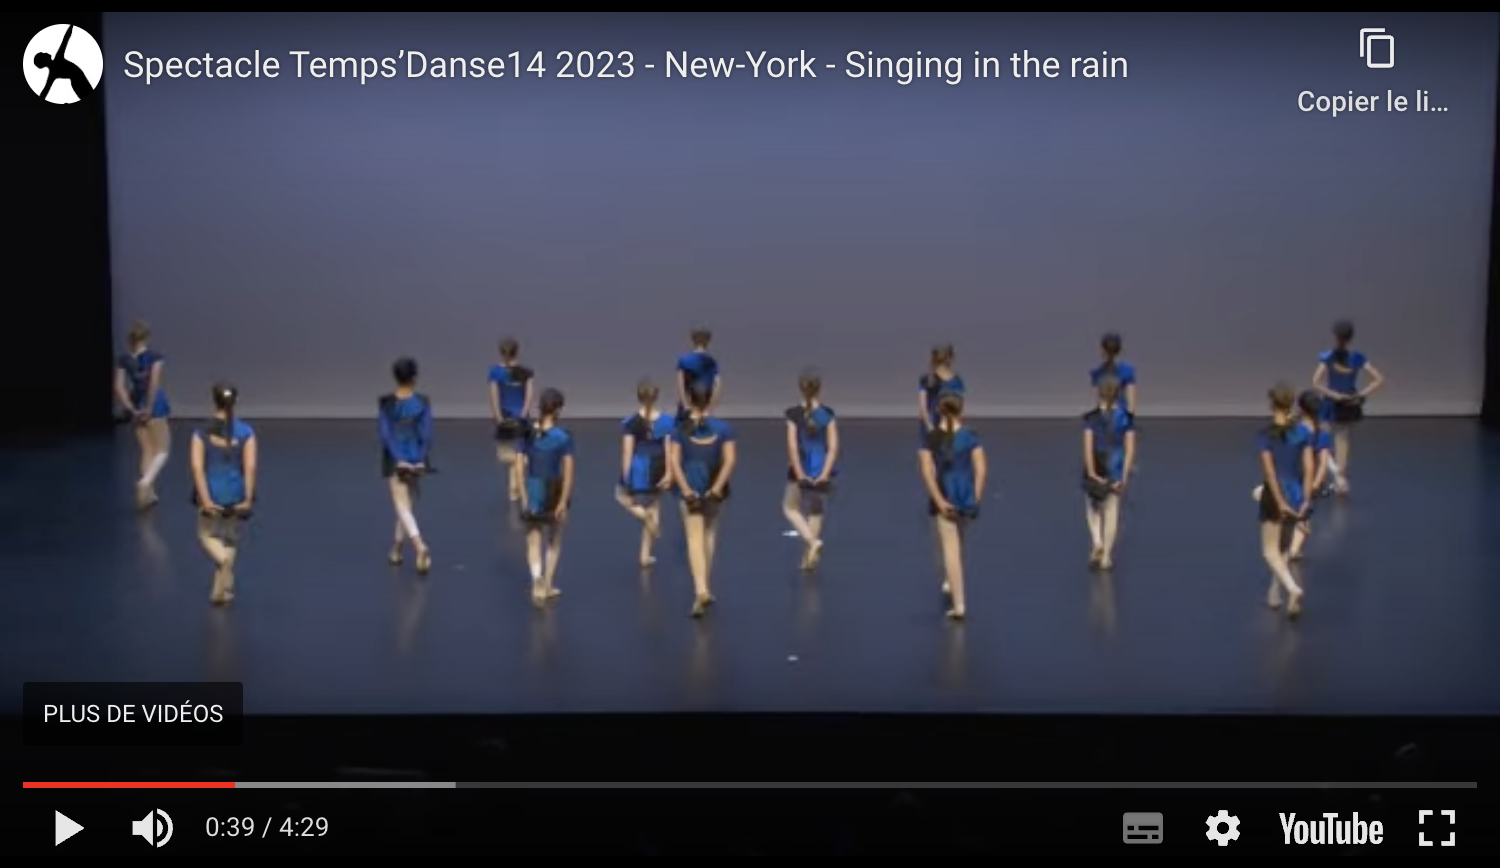 New-York - Singing in the rain